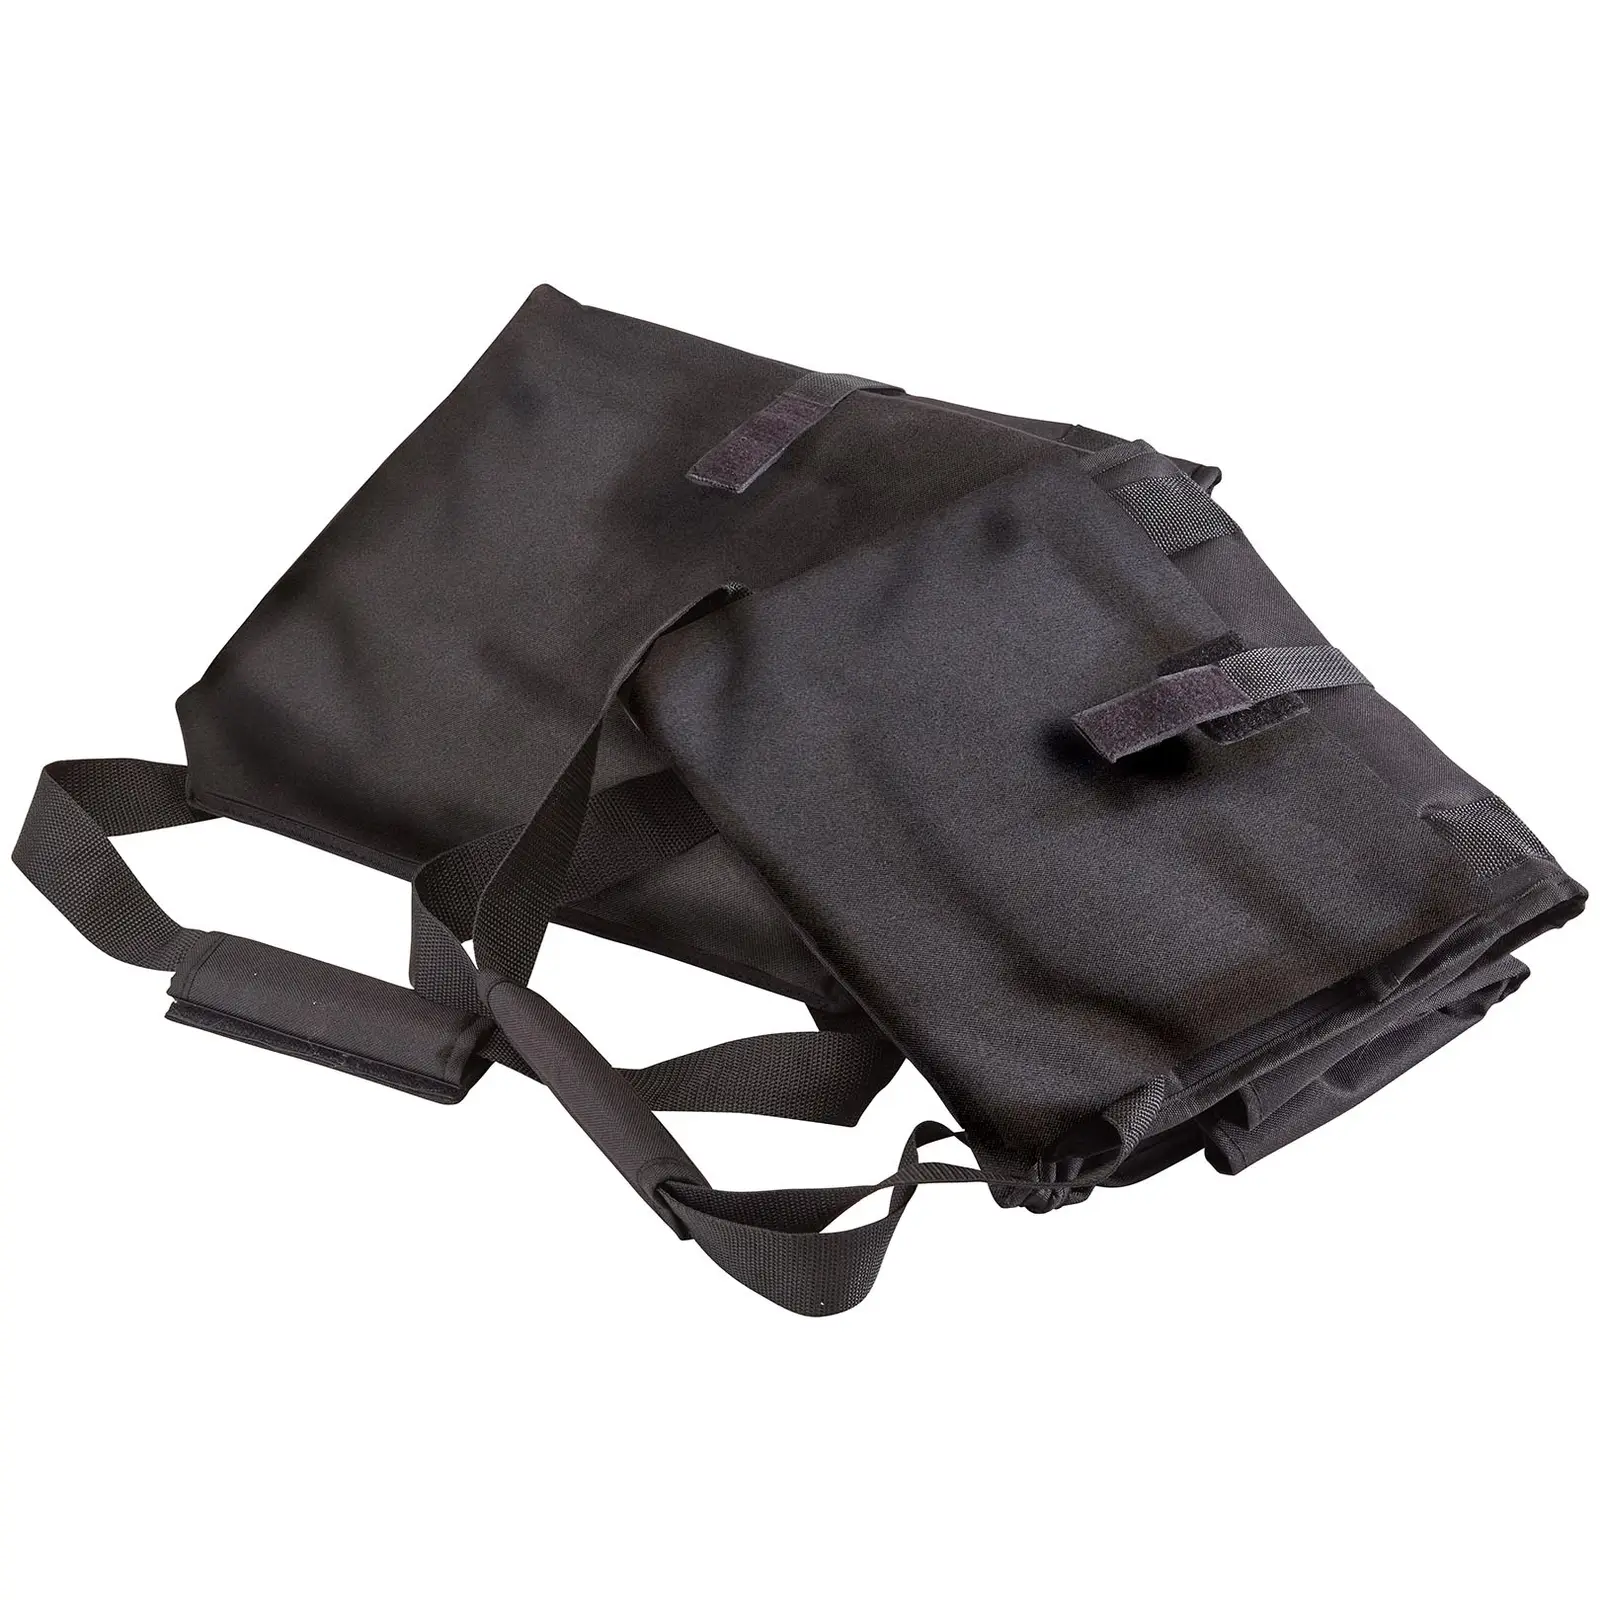 Food Delivery Bag - 30.5 x 38 x 38 cm - Black - foldable